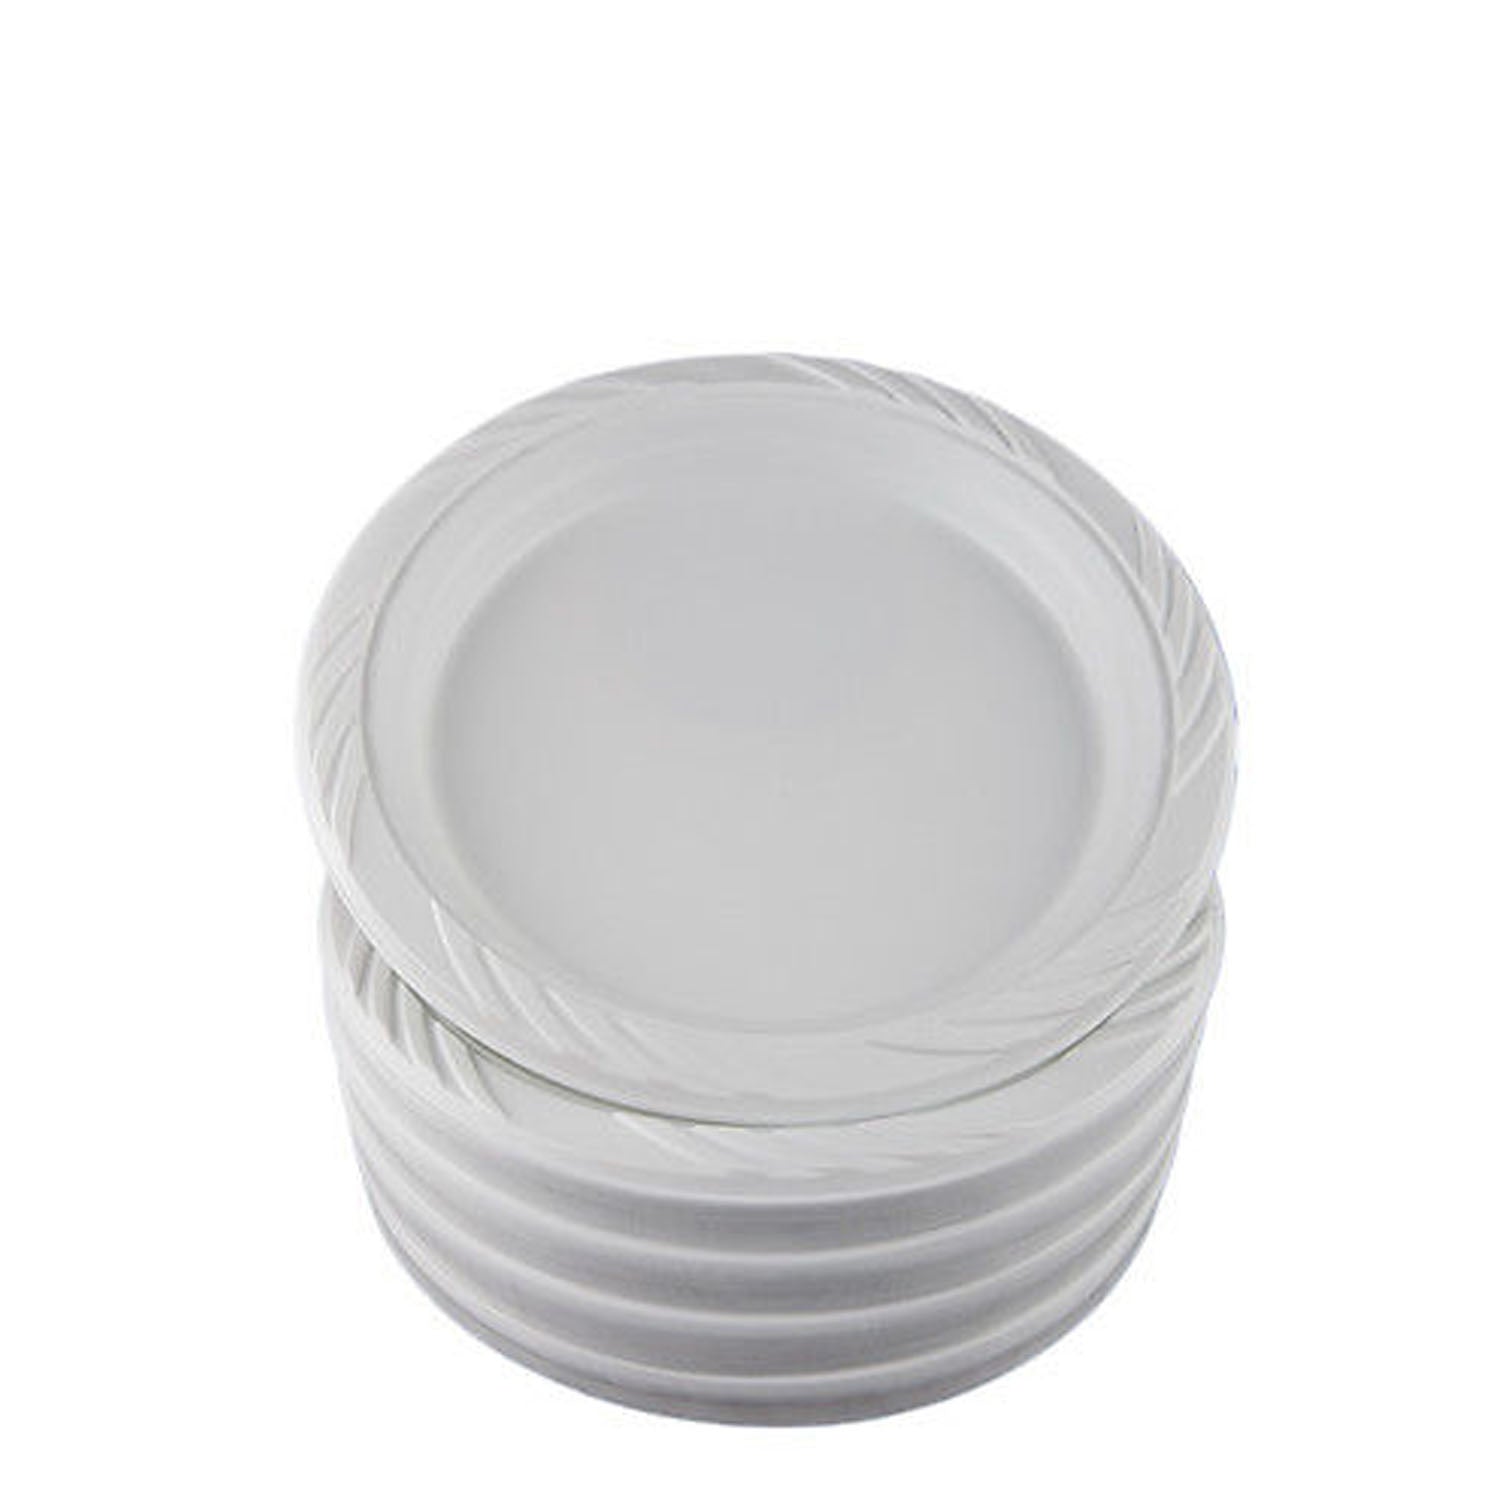 7" White Plastic Plates | 800 Count